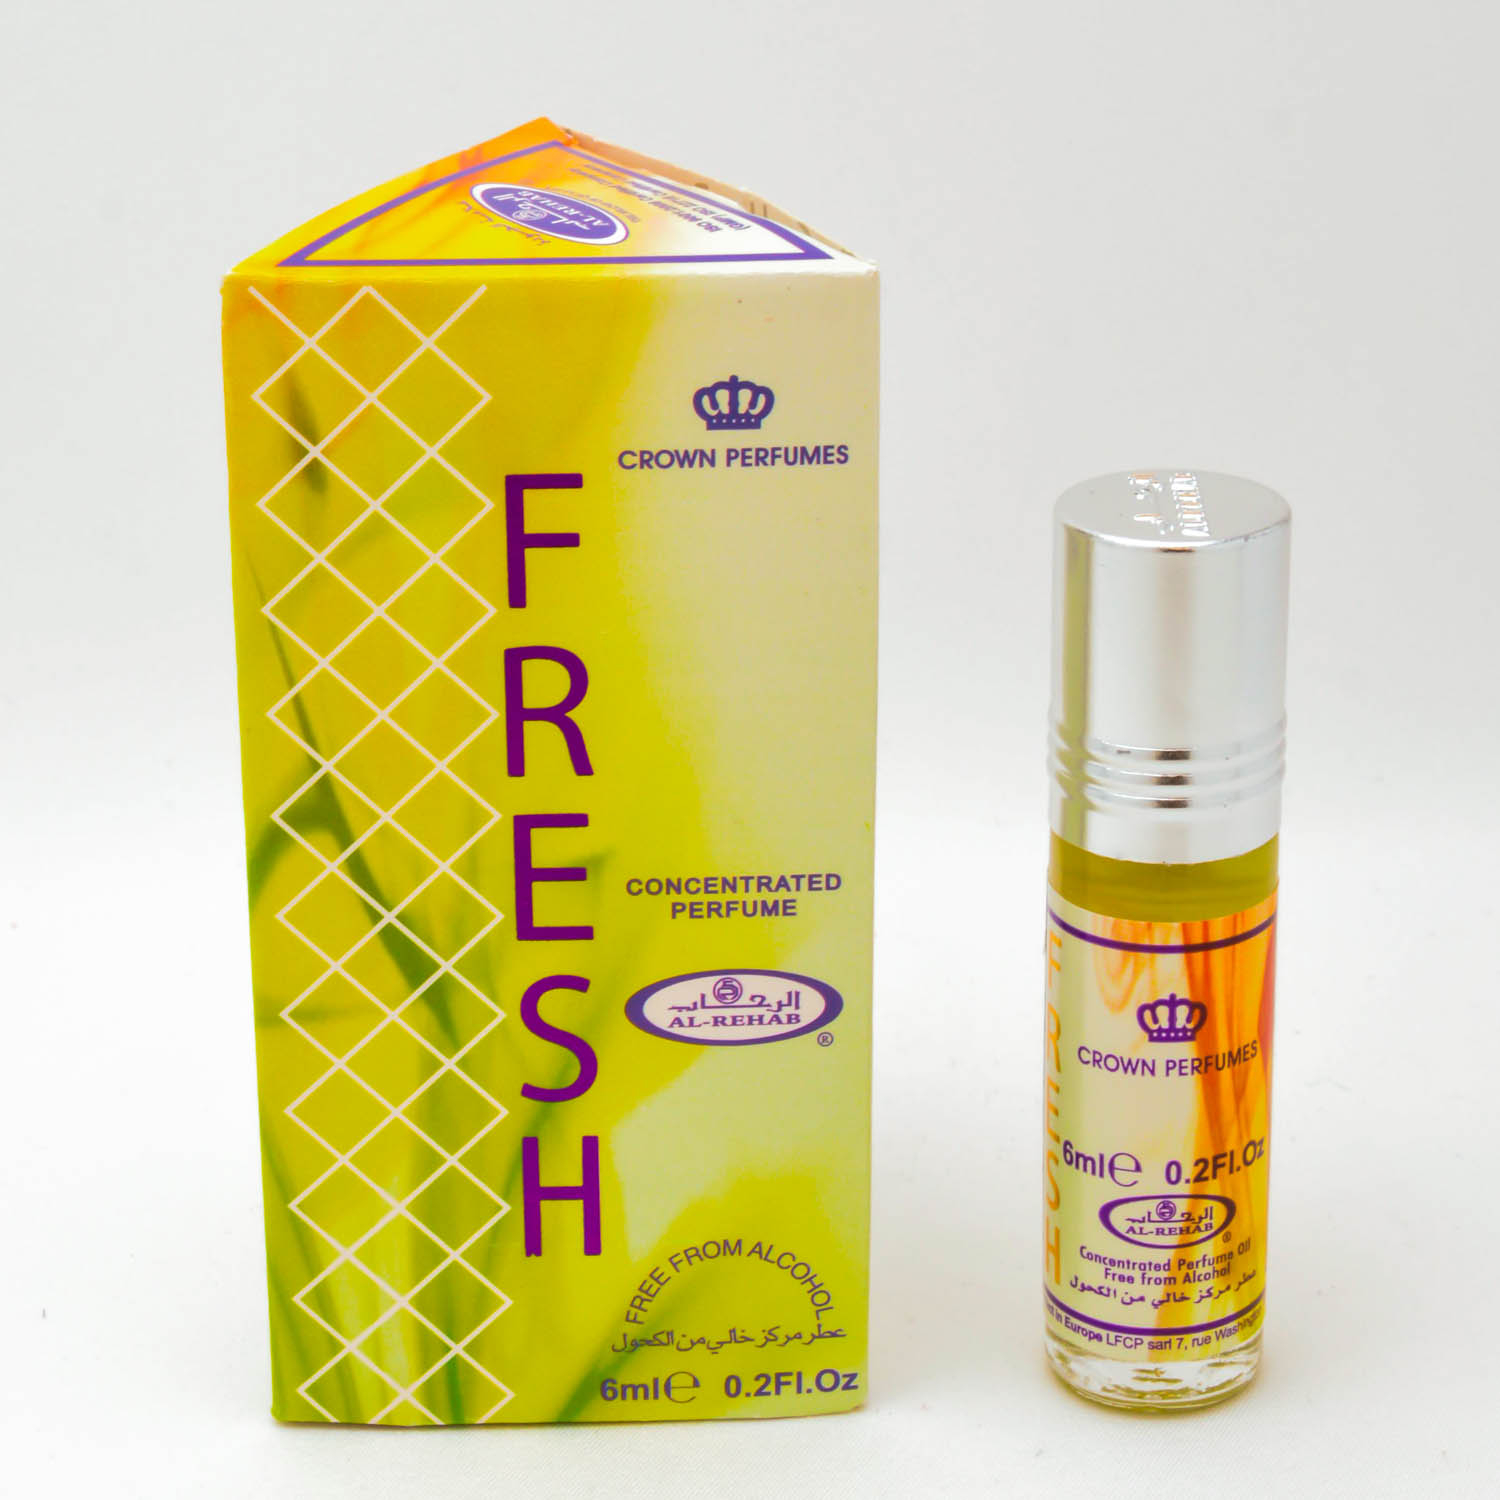 FRESH Concentrated Perfume, Al-Rehab (Масляные арабские духи ФРЕШ (унисекс), Аль-Рехаб), 6 мл.